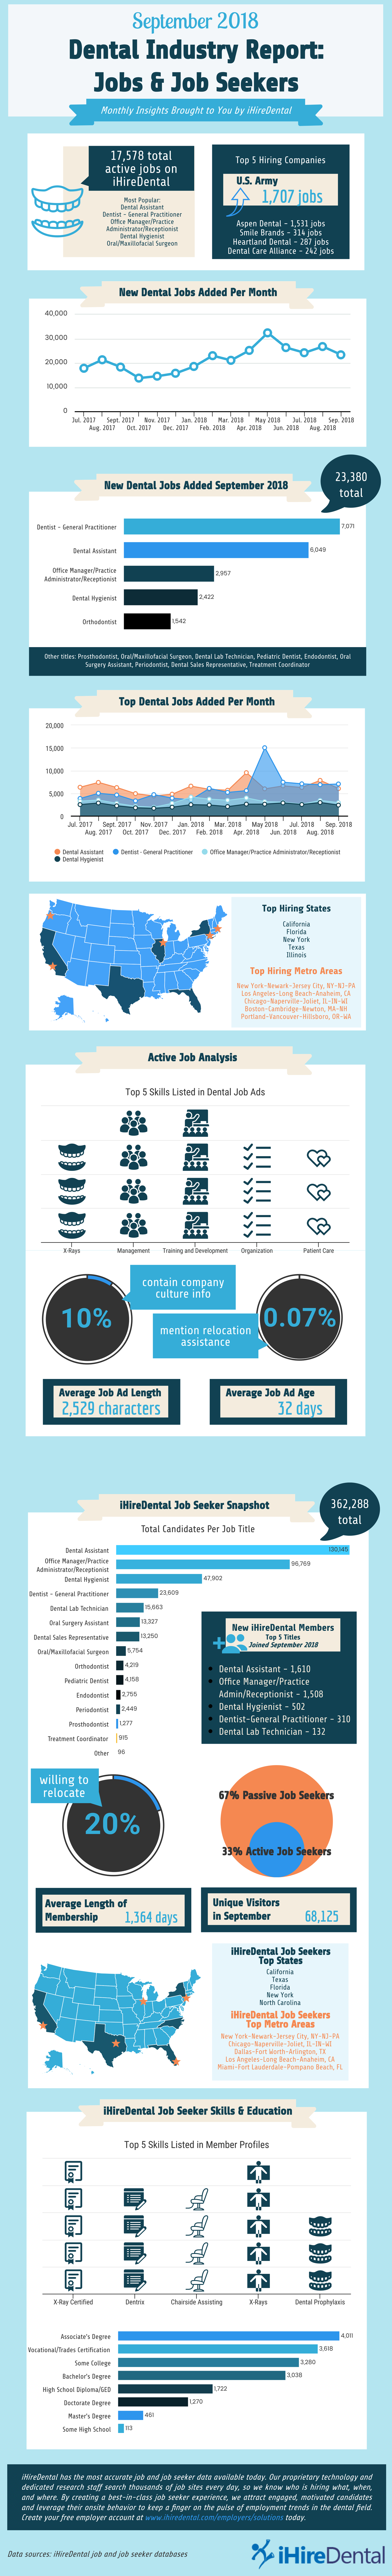 ihiredental september 2018 dental industry report infographic